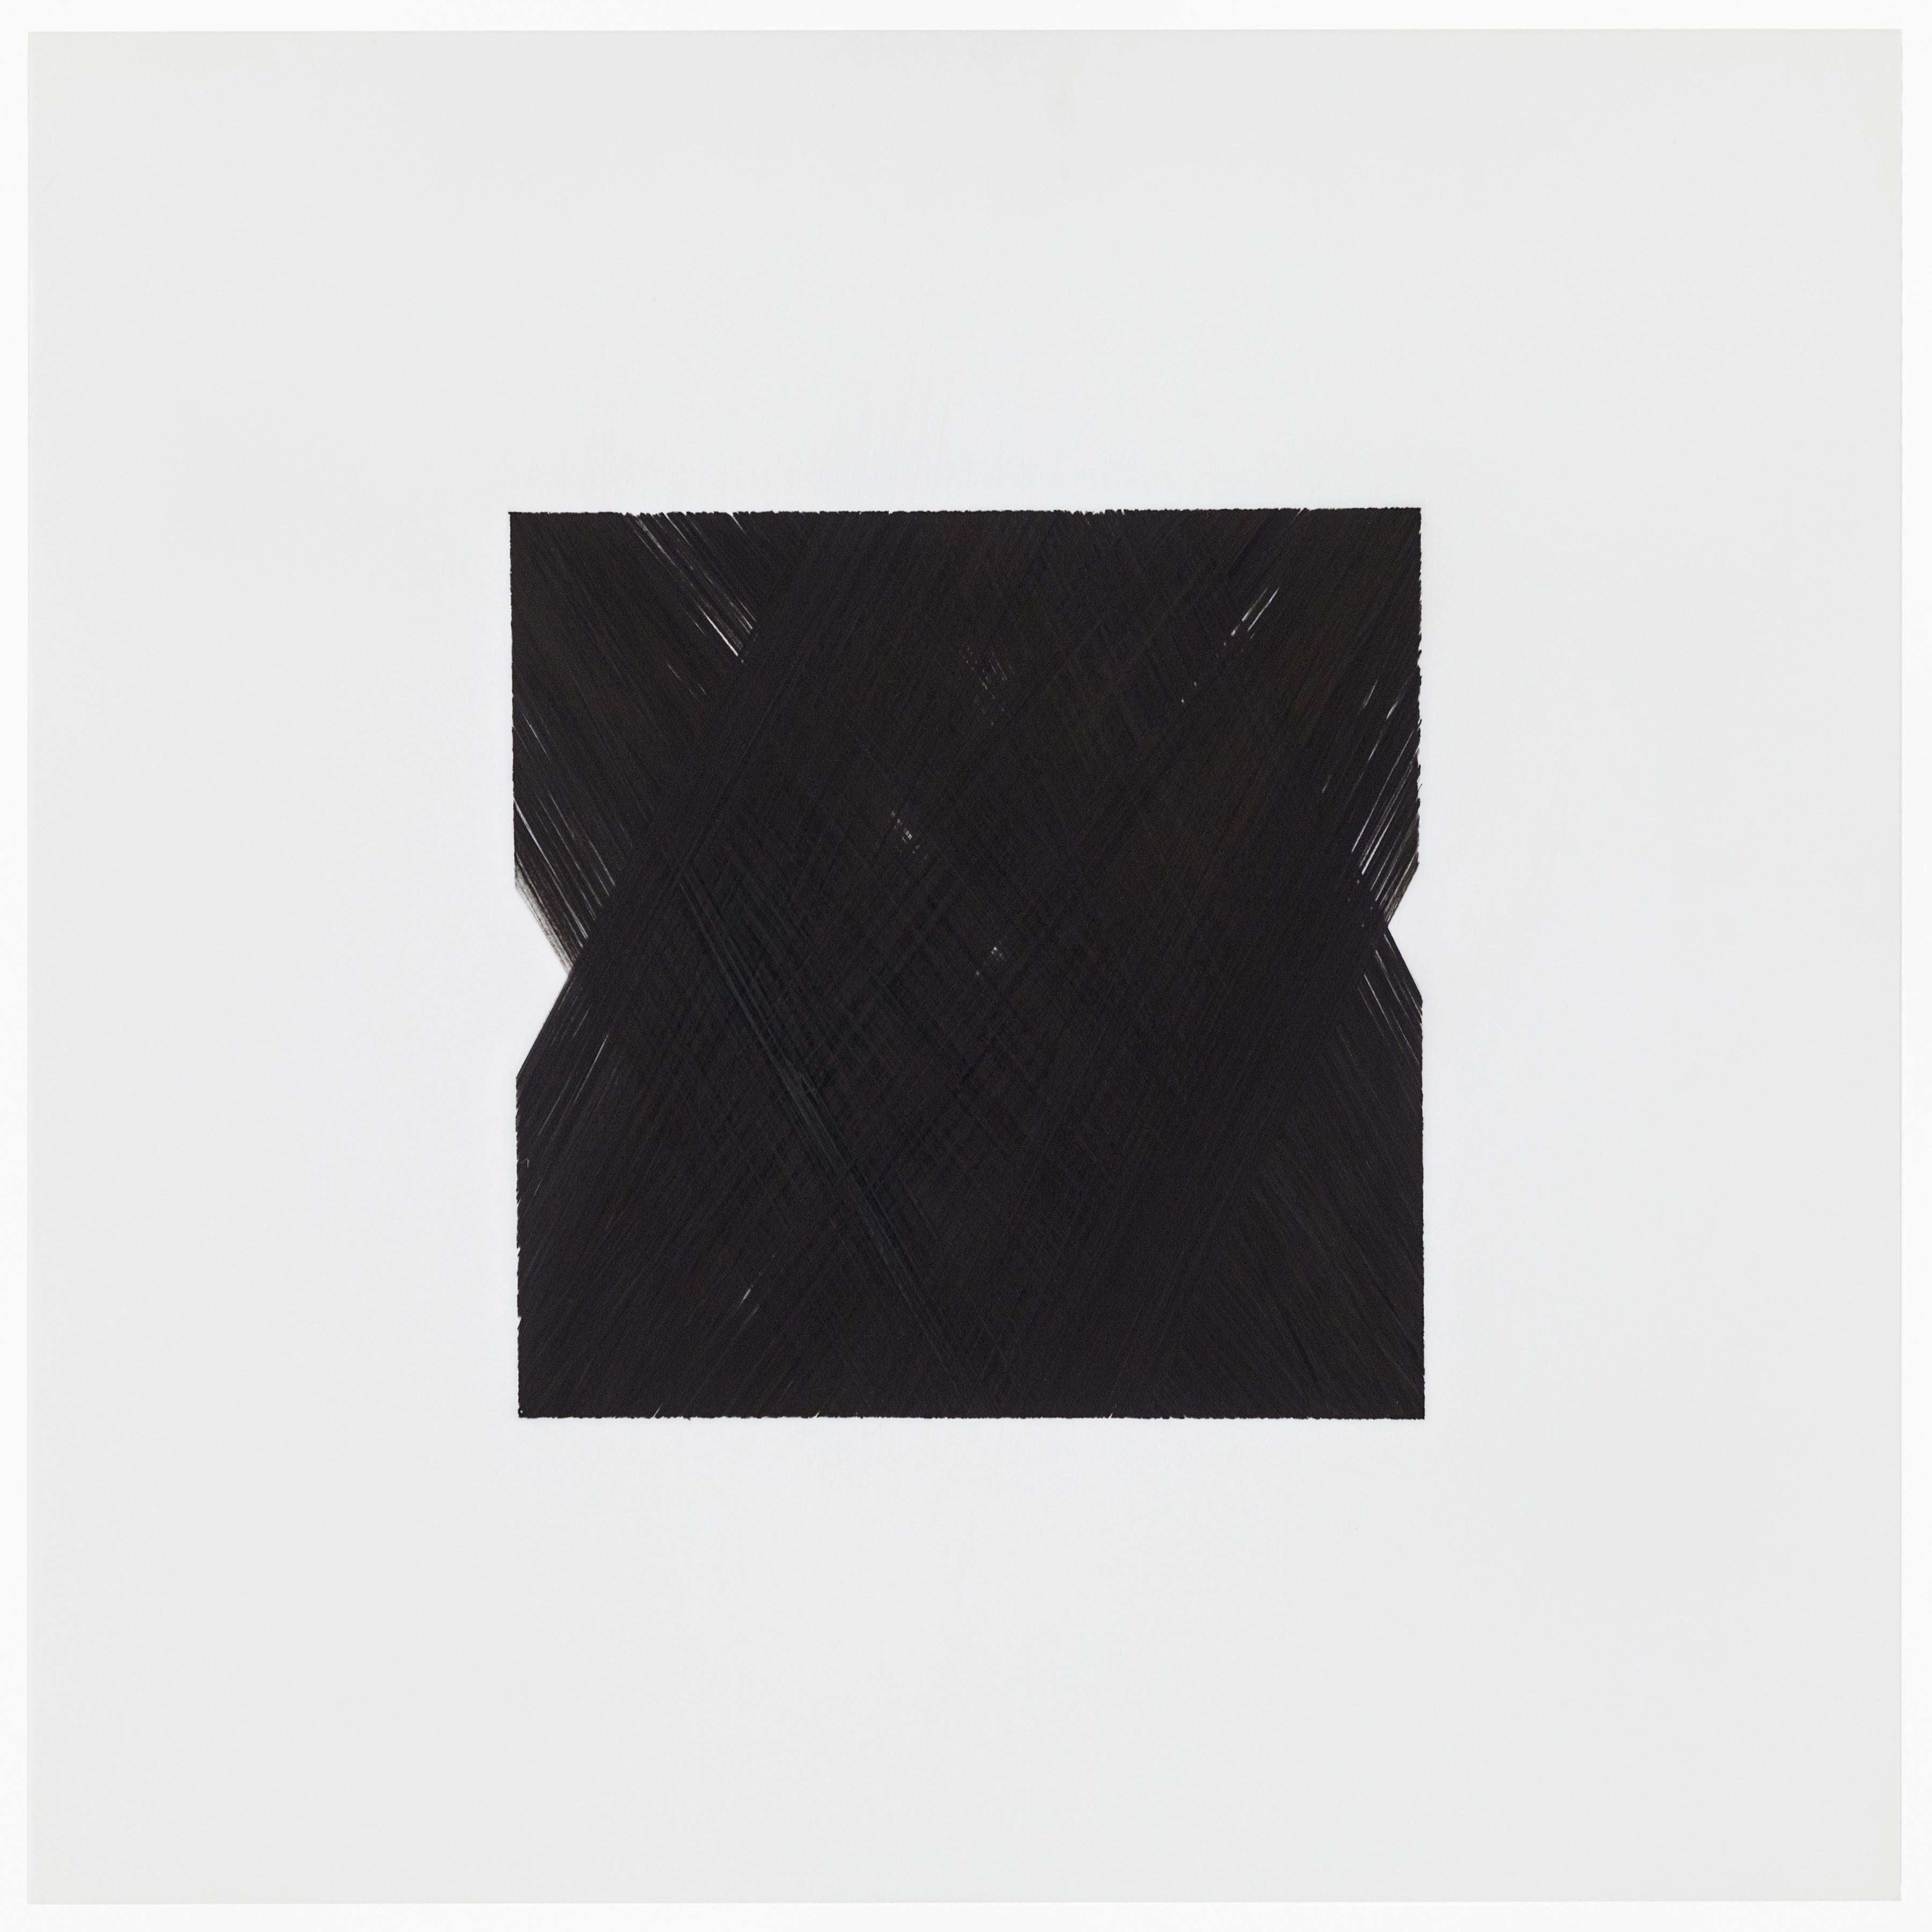 Modern Patrick Carrara Black Ink on Mylar Drawings, Appearance Series, 2013 - 2015 For Sale